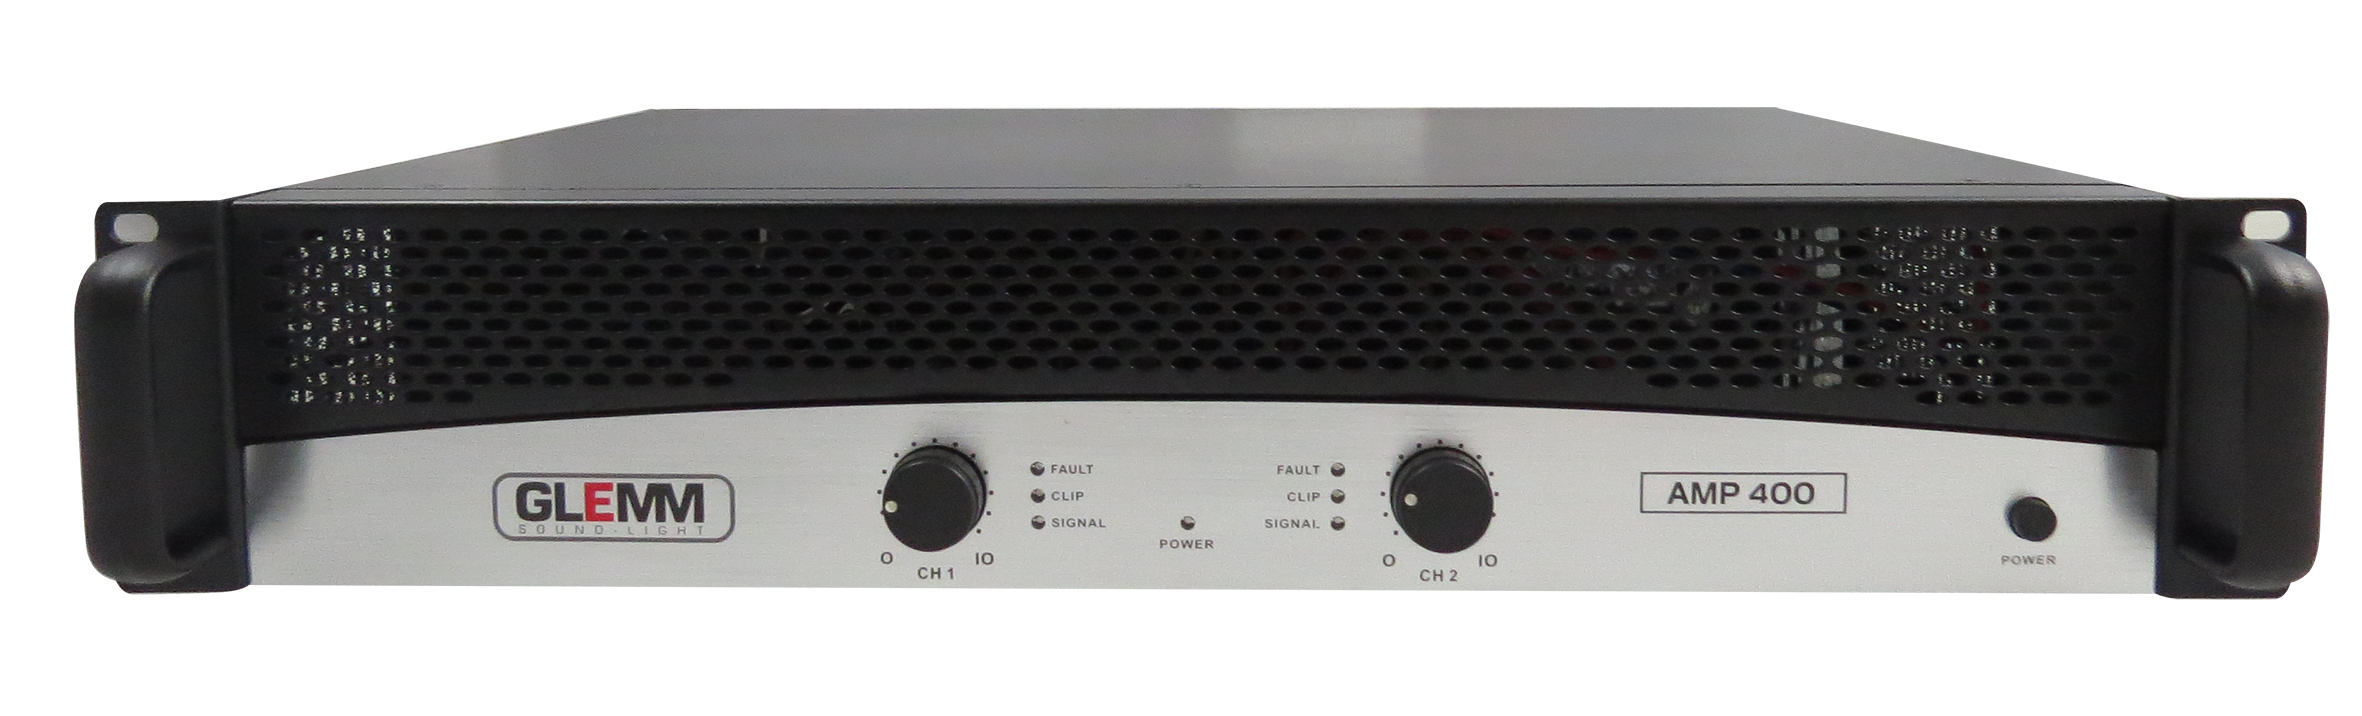 Karma AMP 400 - Amplificatore stereo 2 x 400W